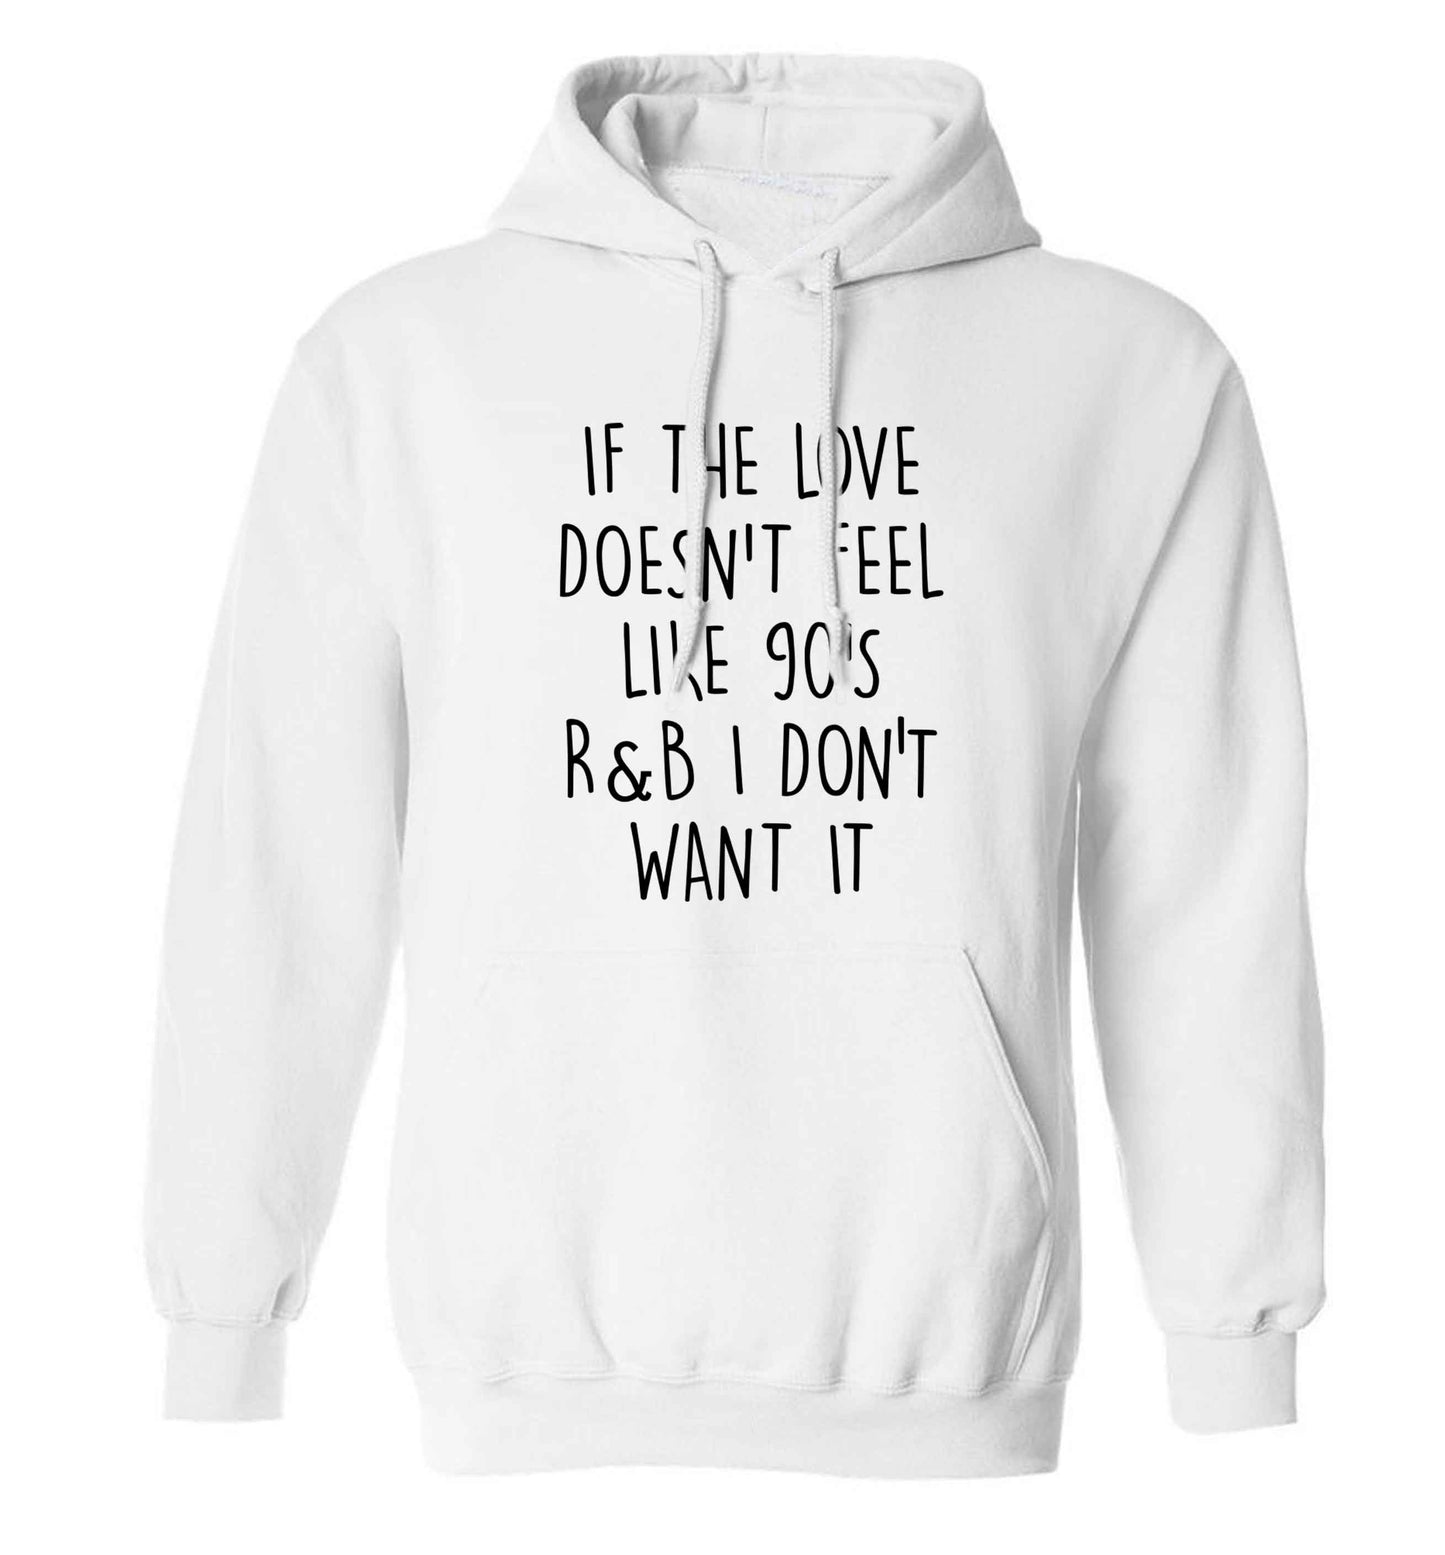 If the love doesn't feel like 90's r&b I don't want it adults unisex white hoodie 2XL